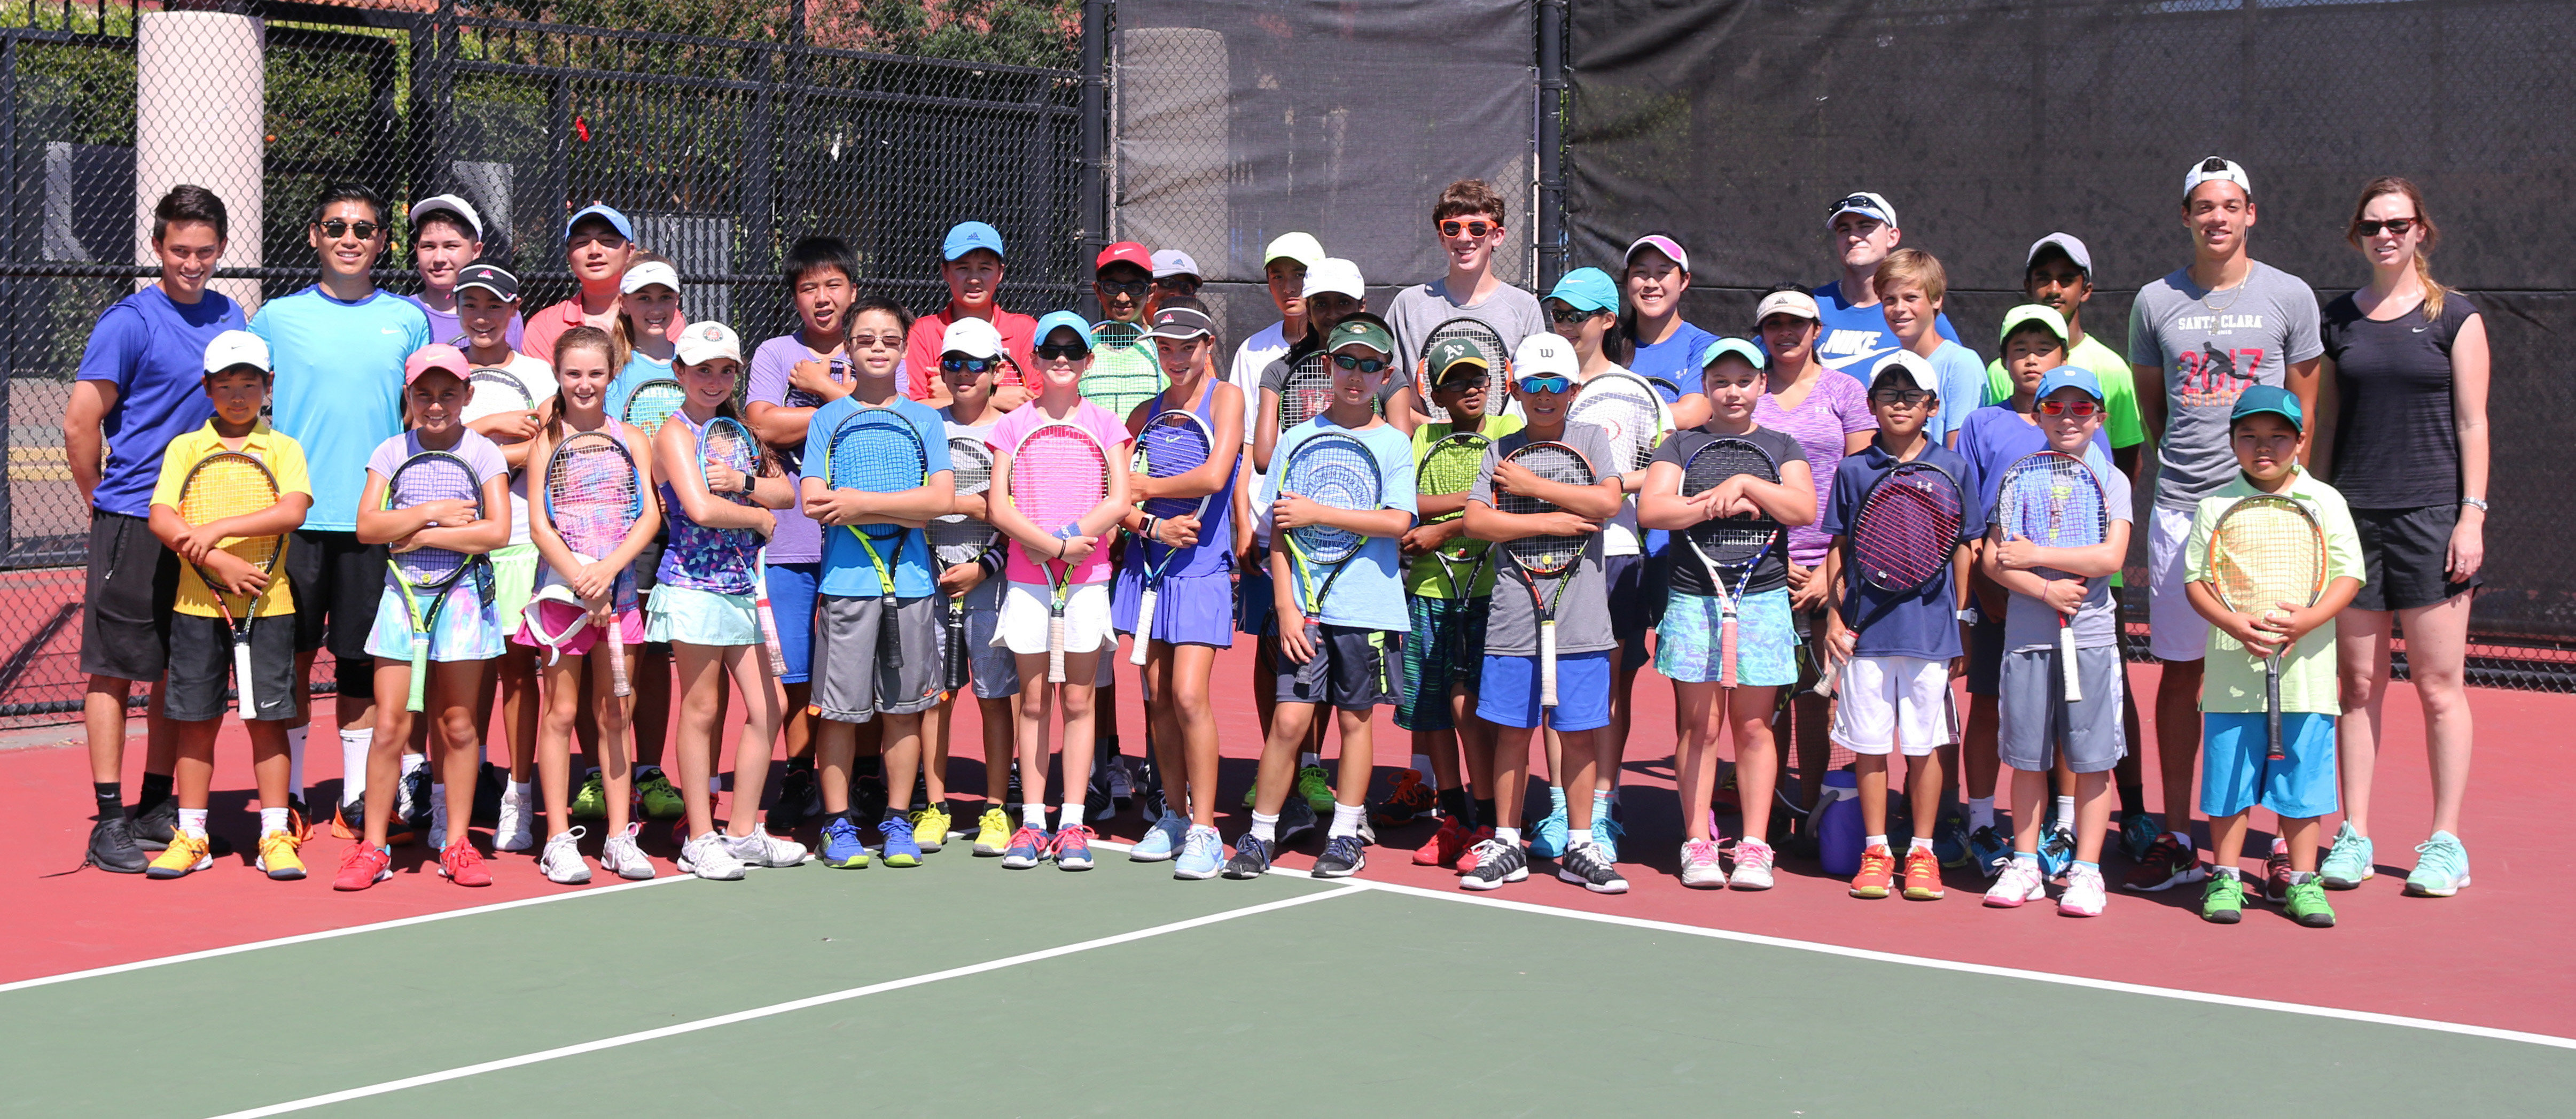 Tennis Academy Training Northern California South Bay Area